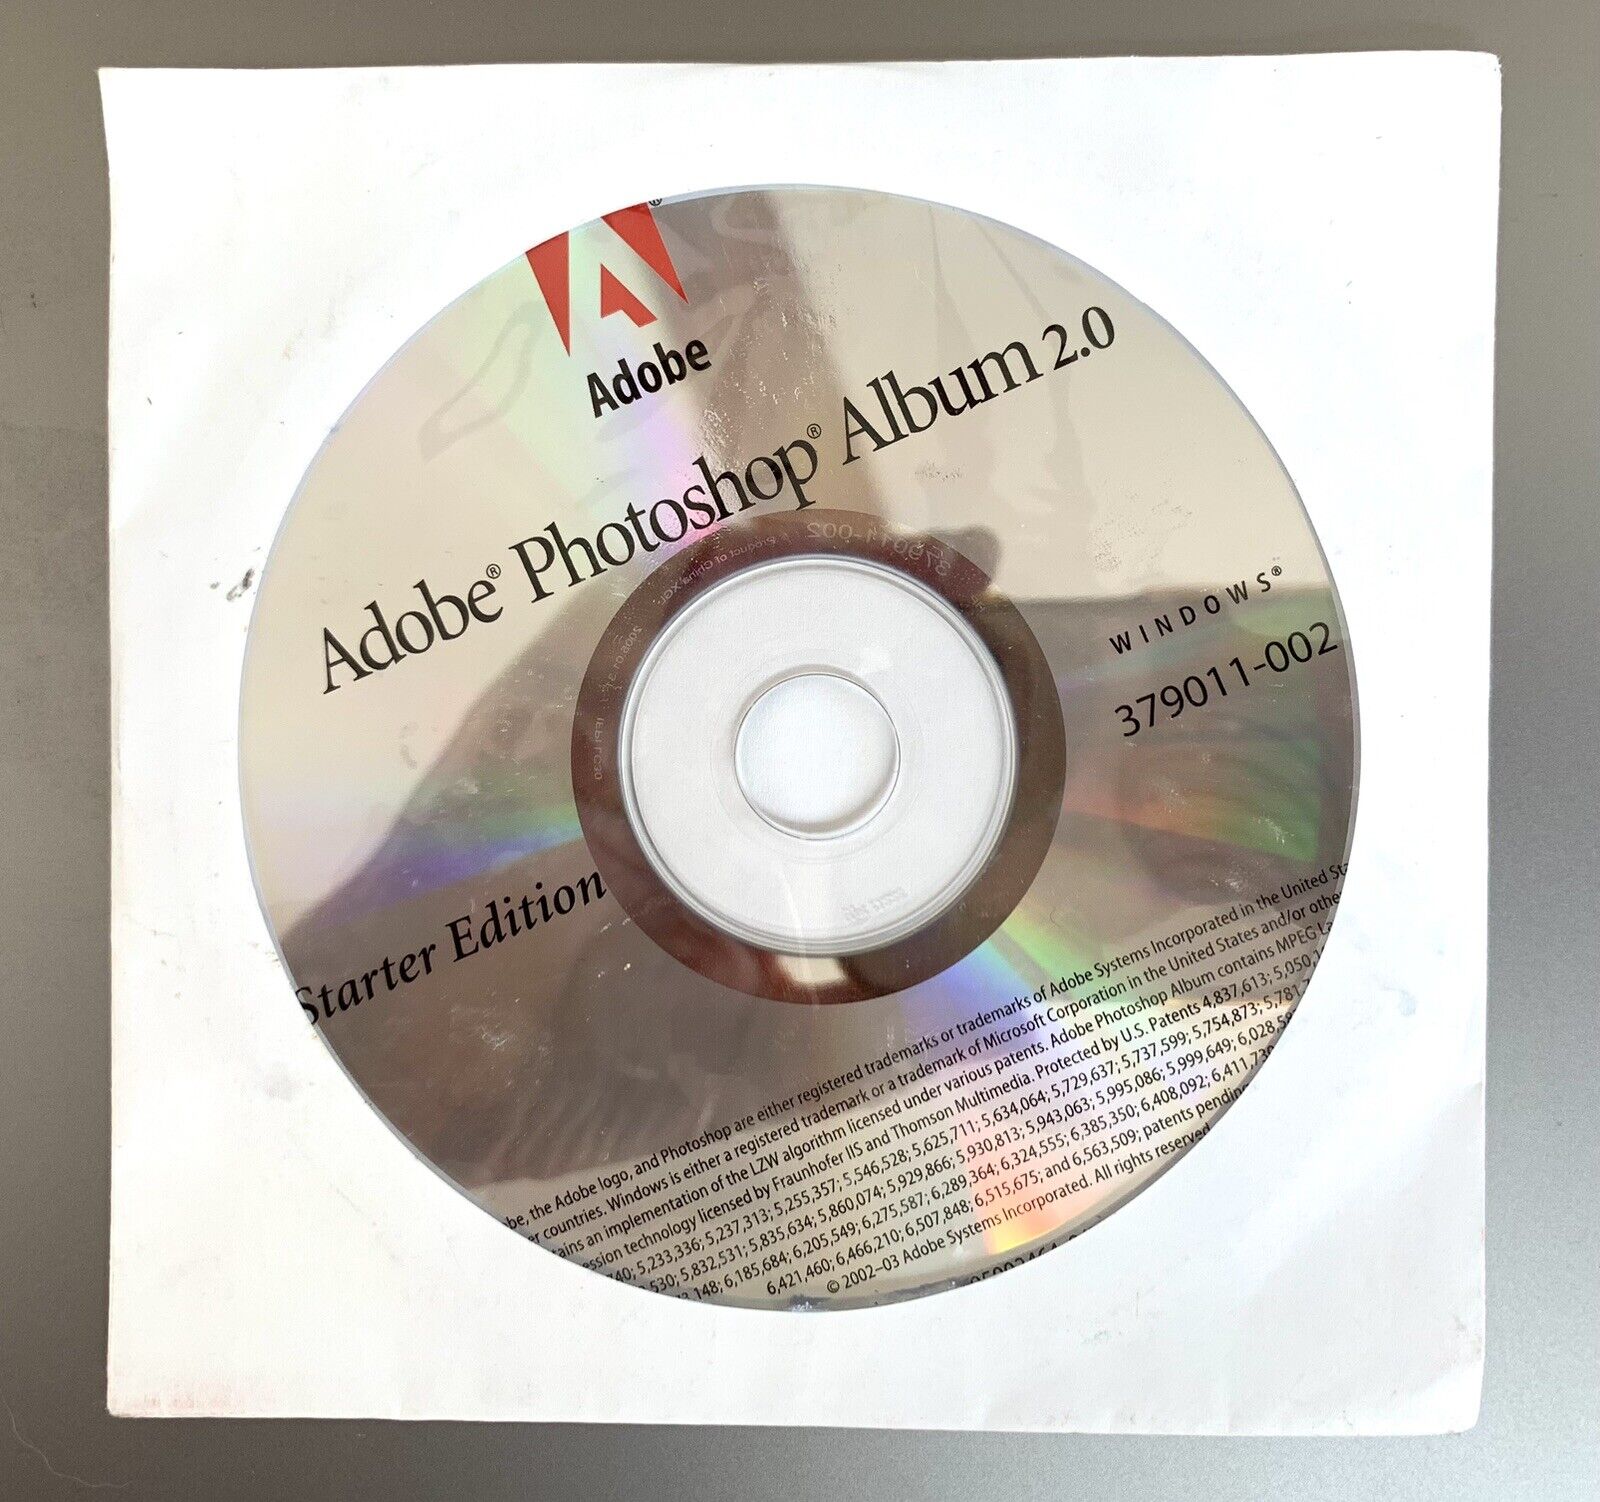 NEW & SEALED Adobe Photoshop Album 2.0 Starter Edition 379011-002